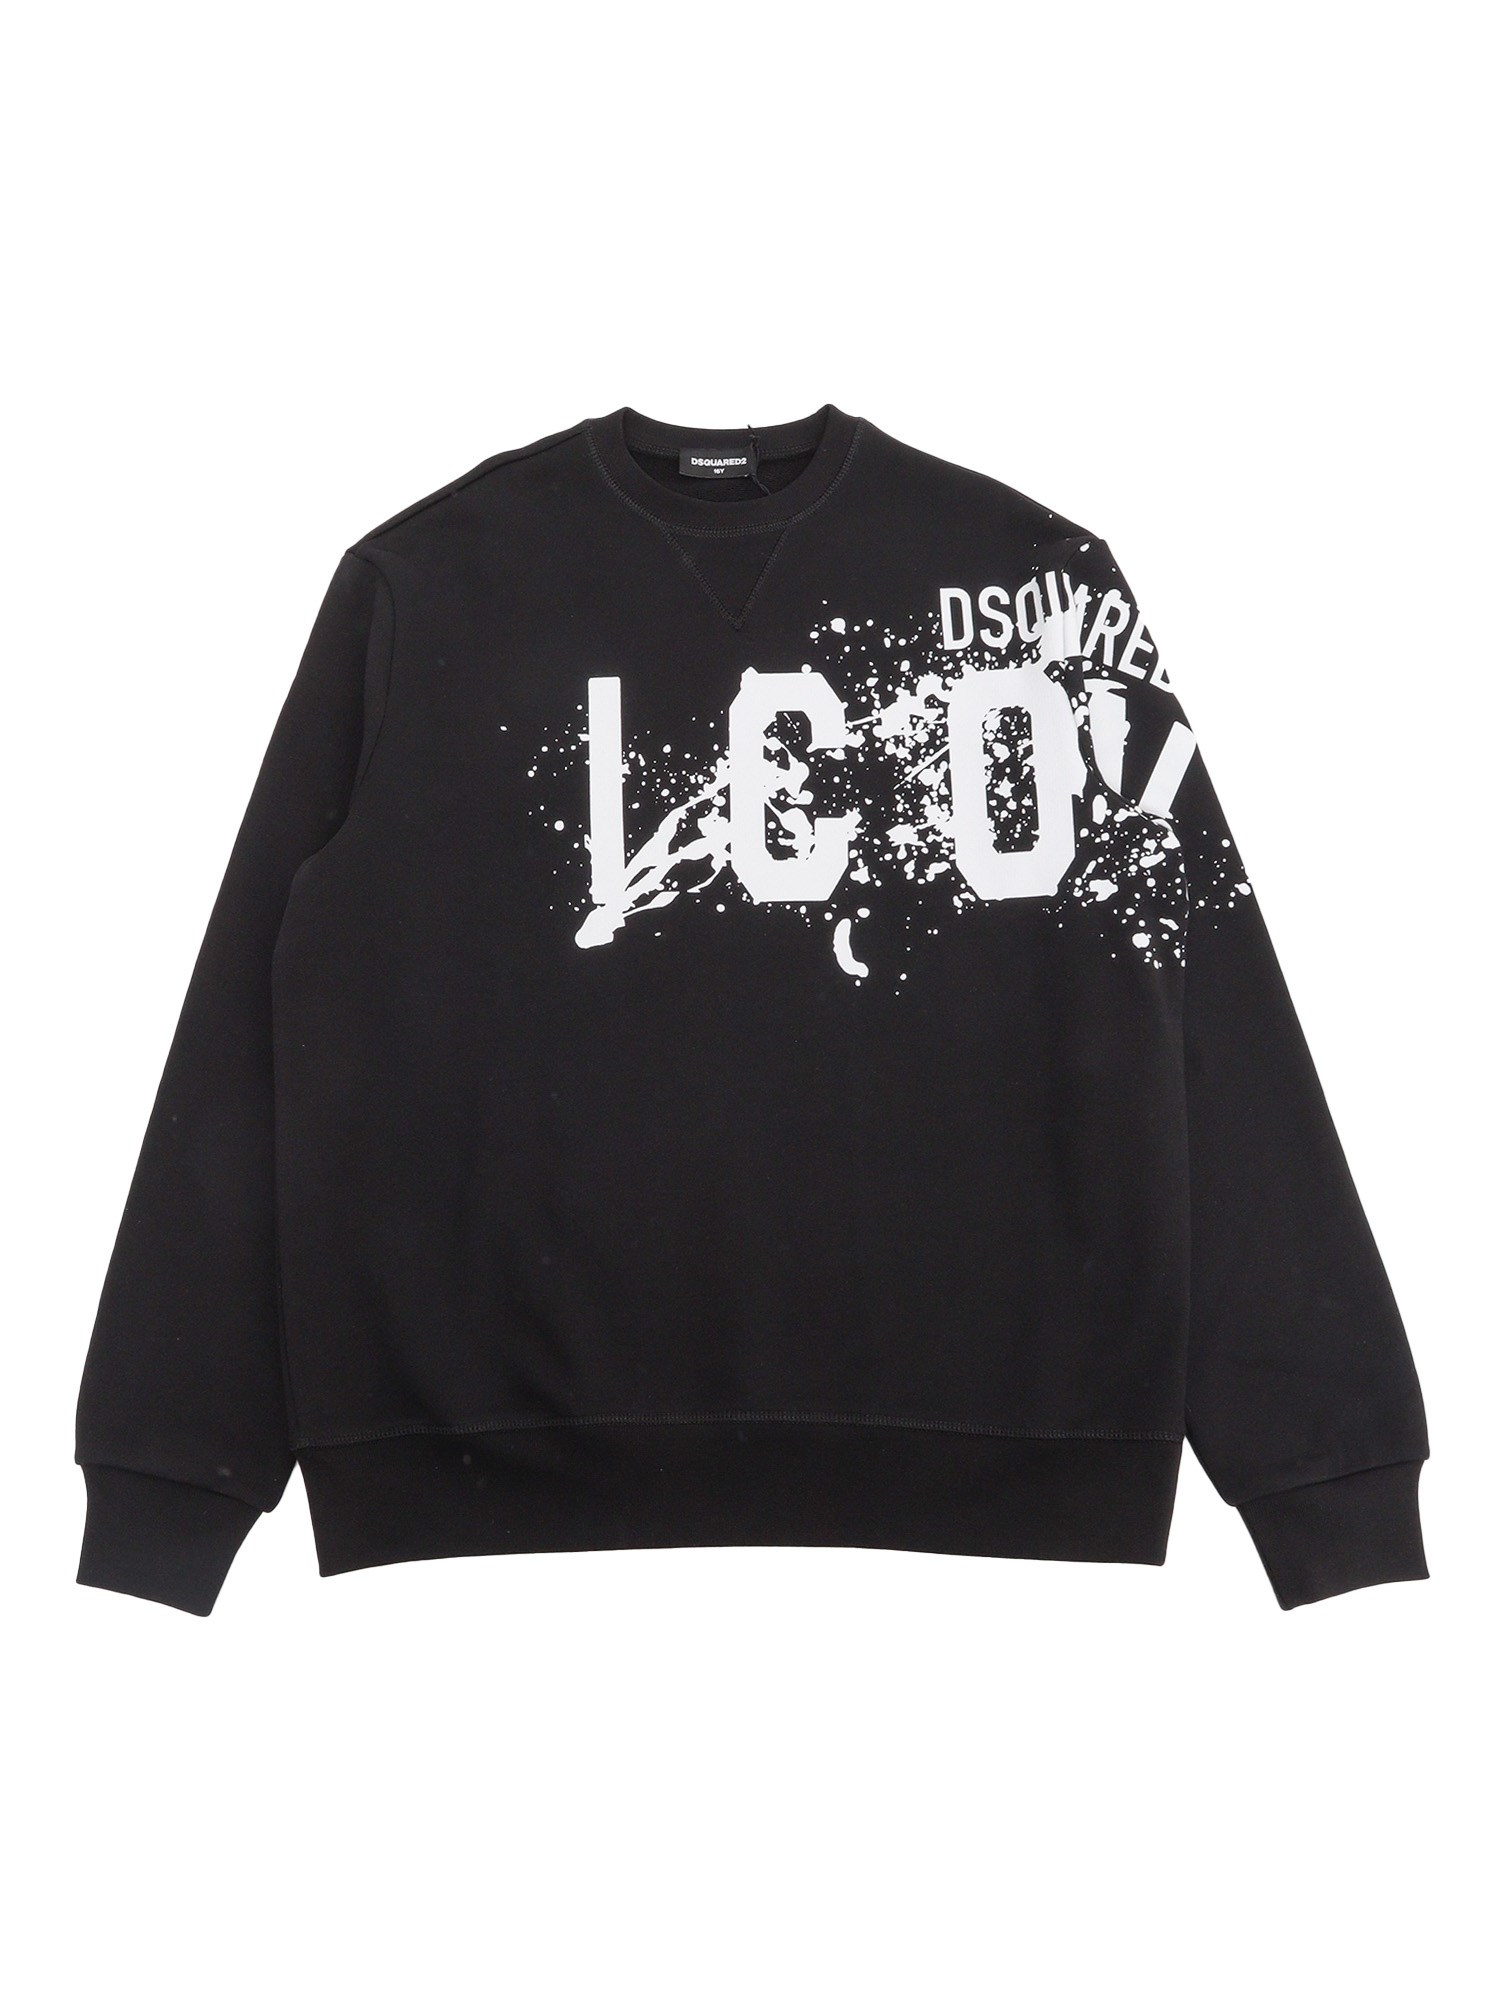 D-squared2 Black Sweatshirt With Print